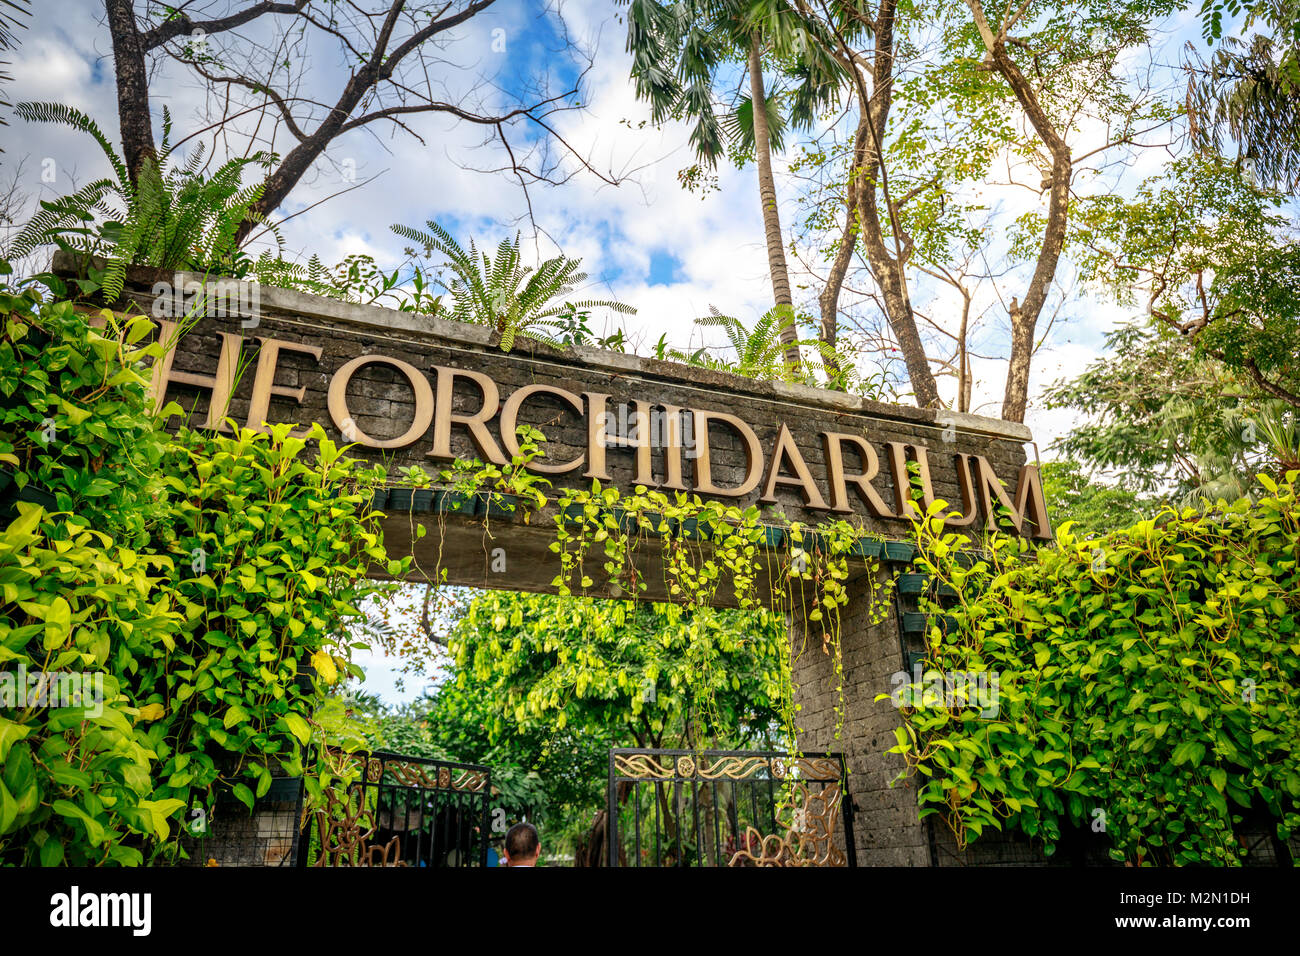 Manila, Philippinen - Feb 4, 2018: Sighboard der orchidarium in Rizal Park, Manila City Stockfoto